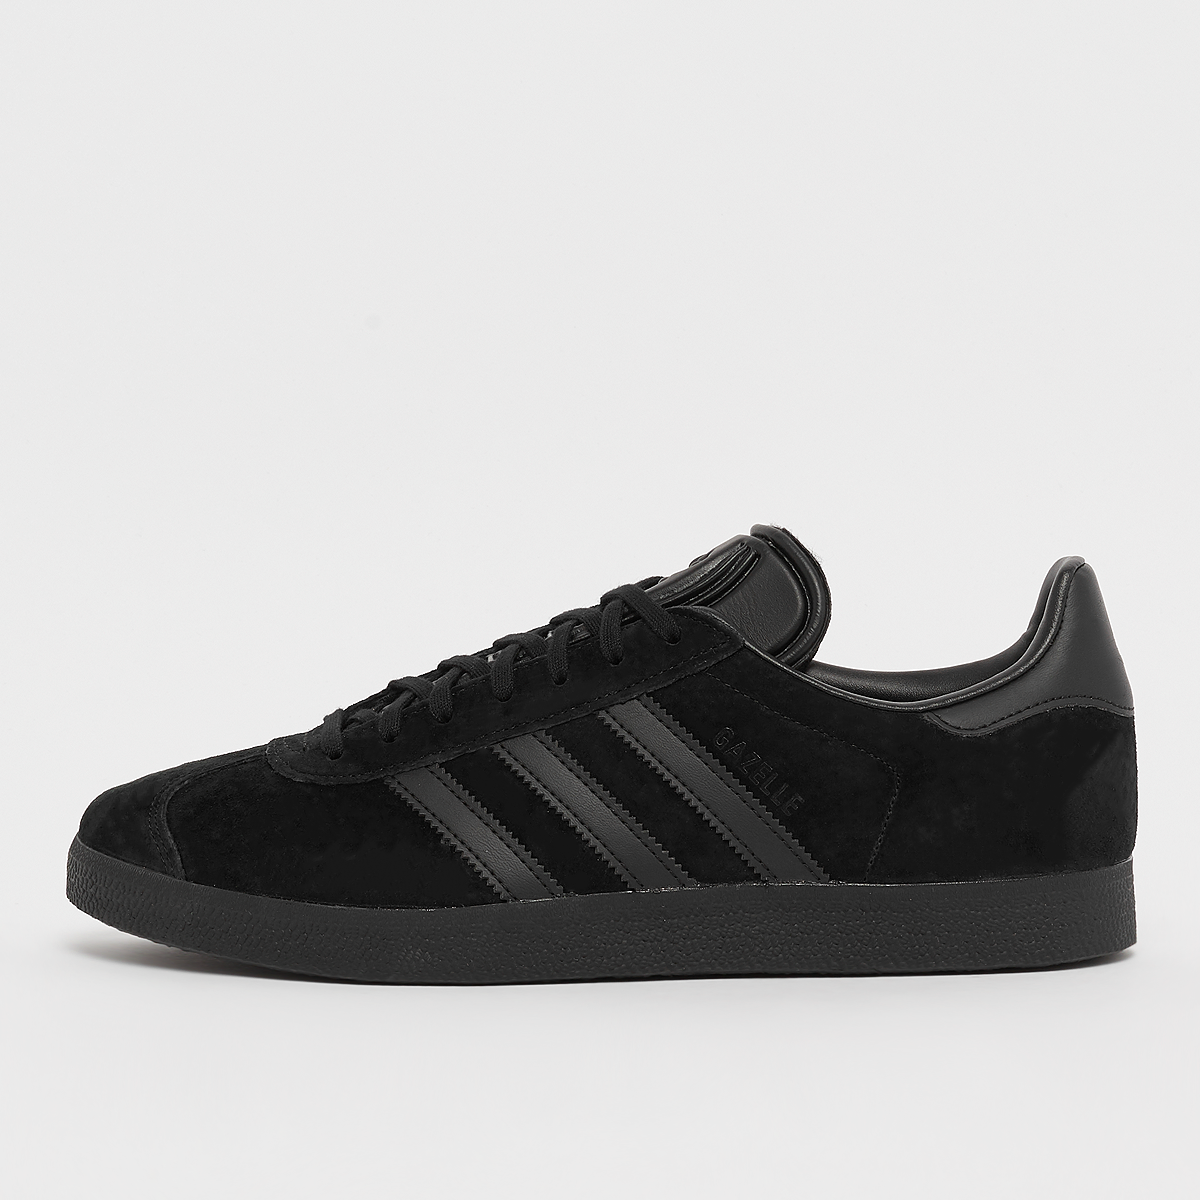 Sneaker Gazelle, adidas Originals, Footwear, core black/core black/core black, taille: 42